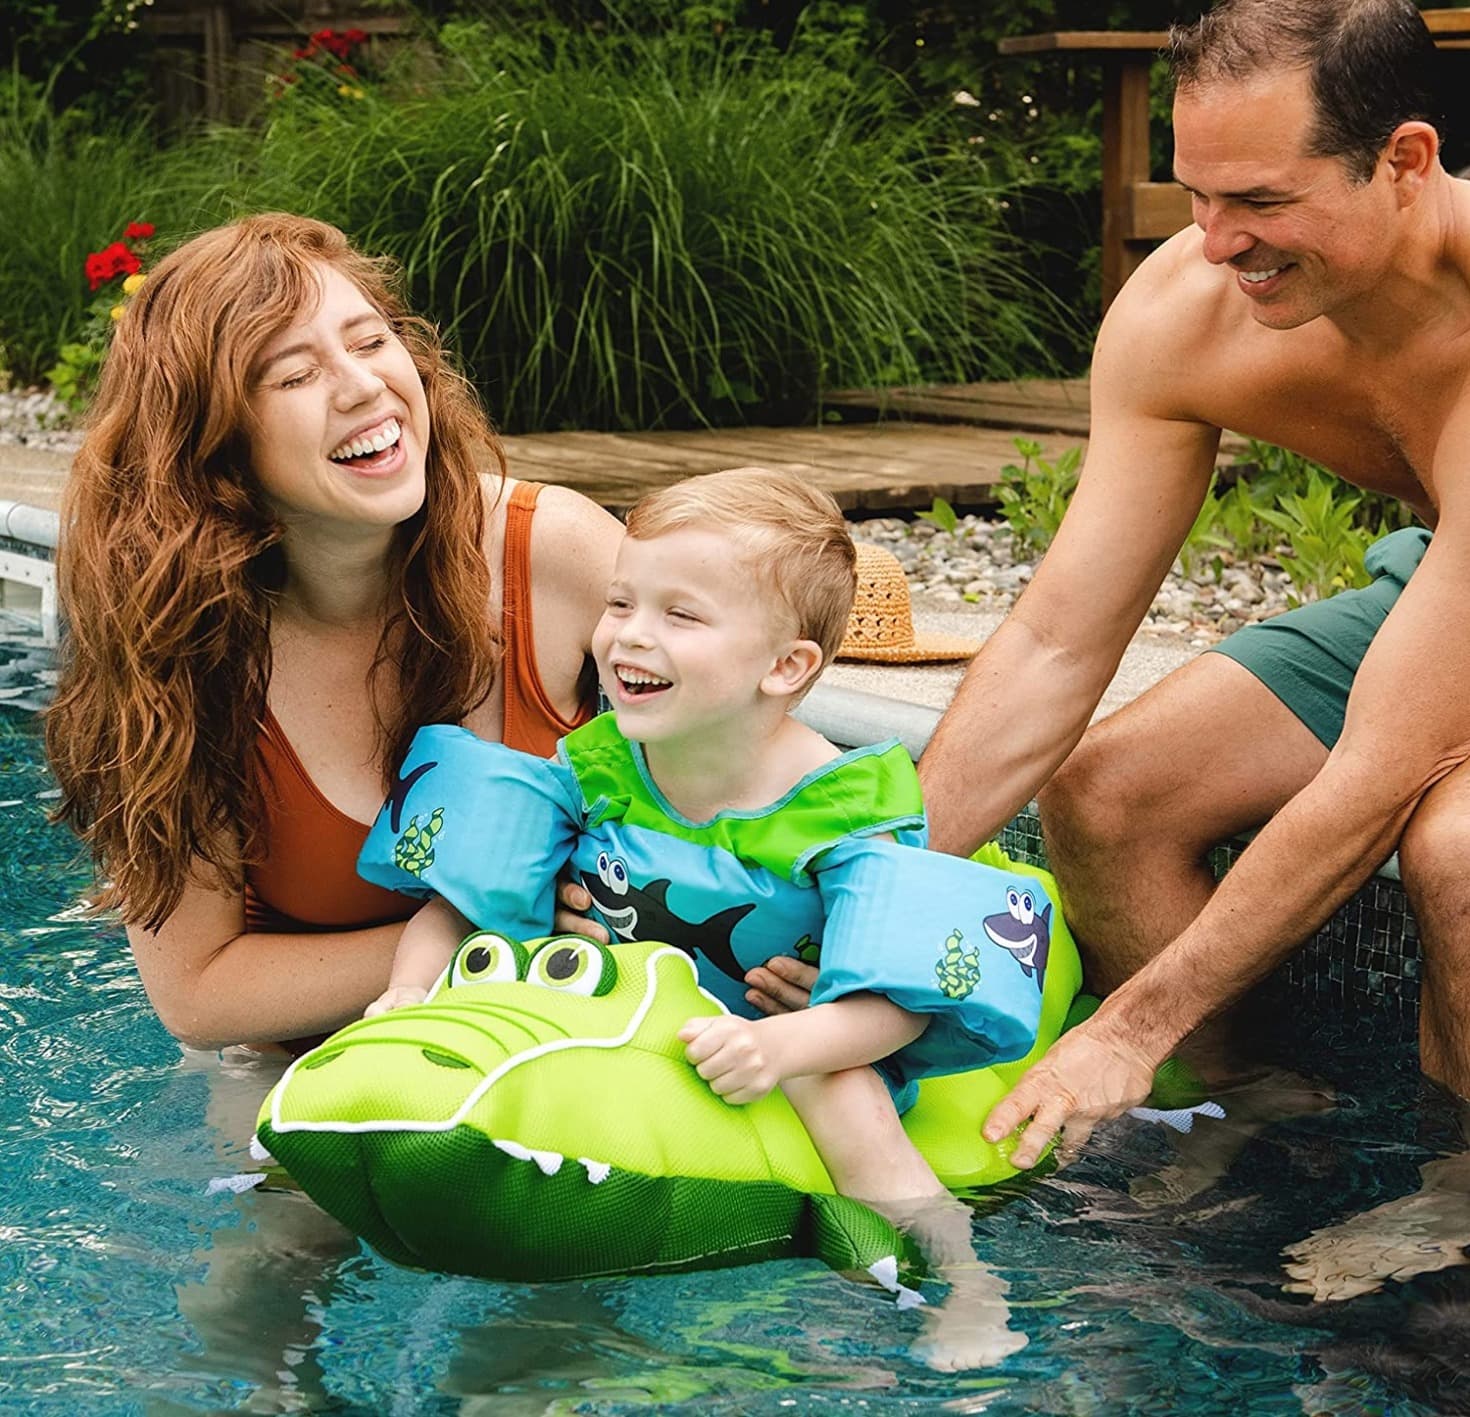 "Experience Fun in the Sun: Must-Have Pool Accessories at FloridaKeysVillas.com!"